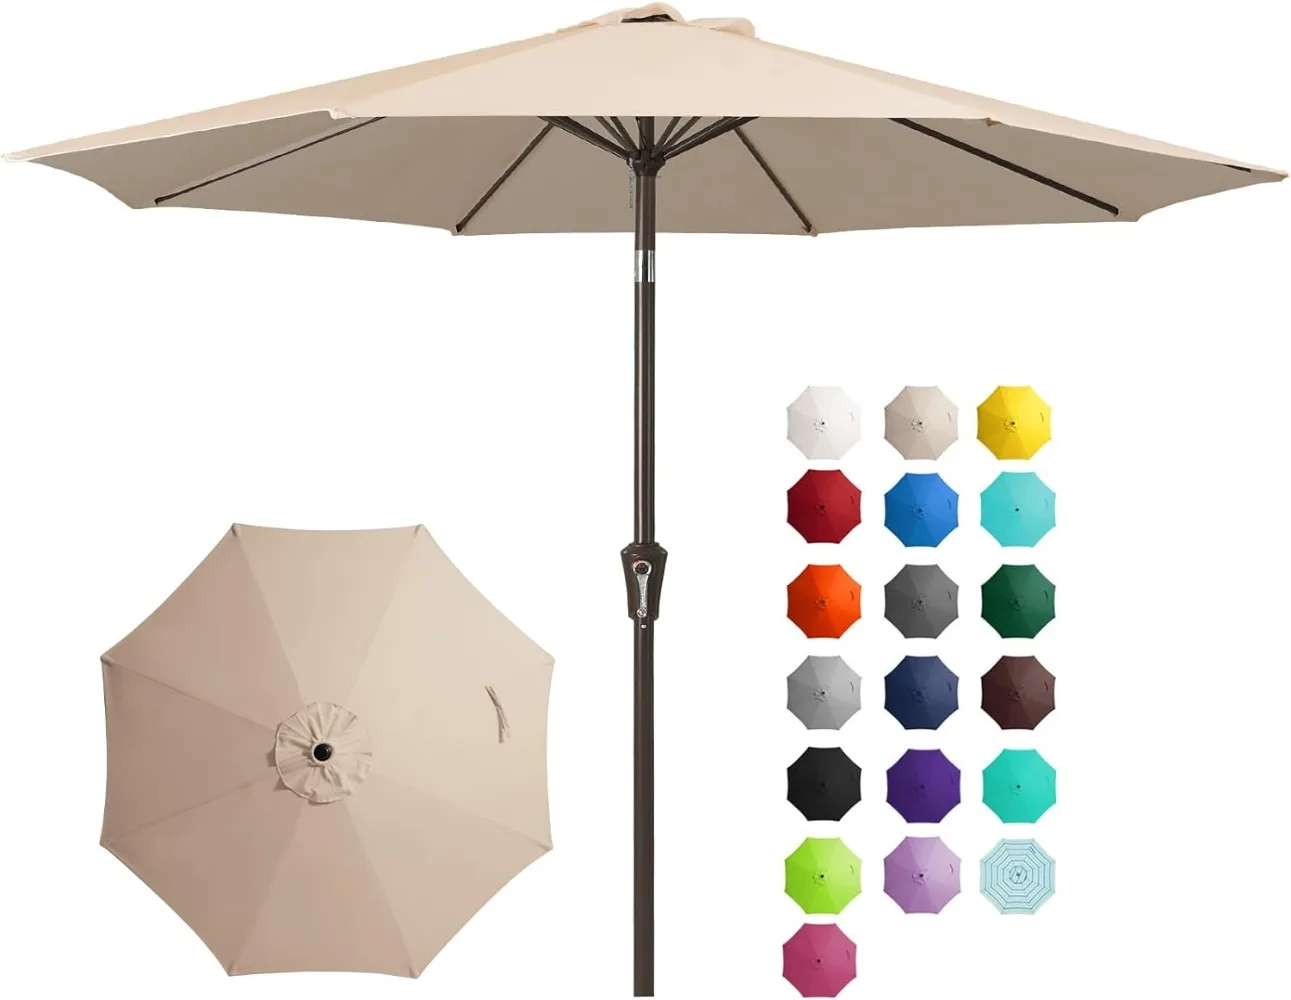 

JEAREY 9FT Outdoor Patio Umbrella Outdoor Table Umbrella with Push Button Tilt and Crank, Market Umbrella 8 Sturdy Ribs